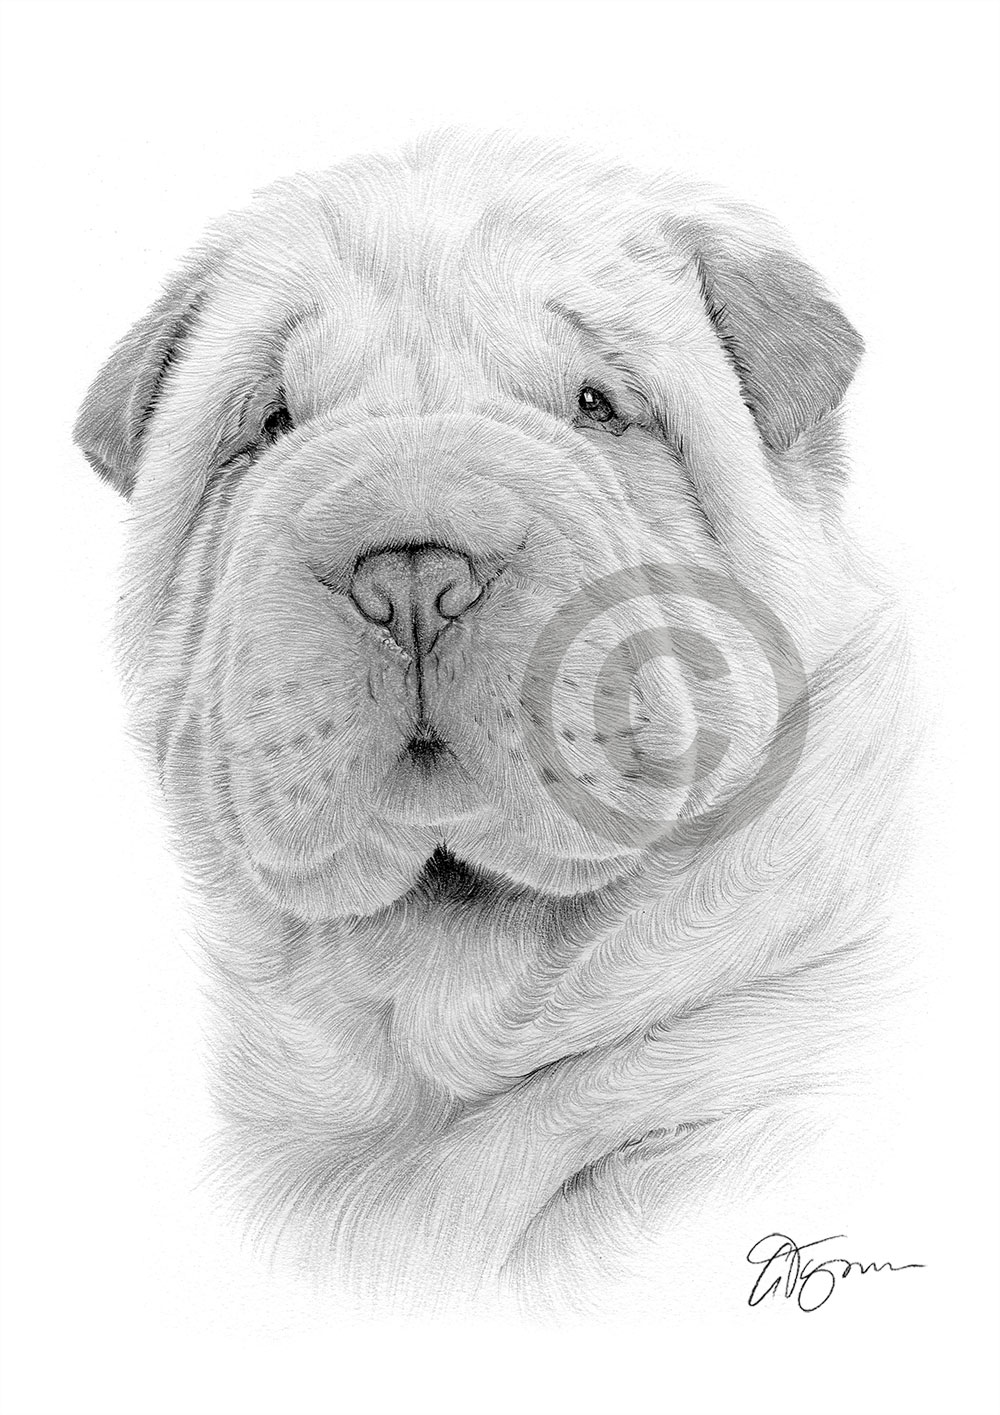 Pencil drawing of a Shar Pei puppy by artist Gary Tymon